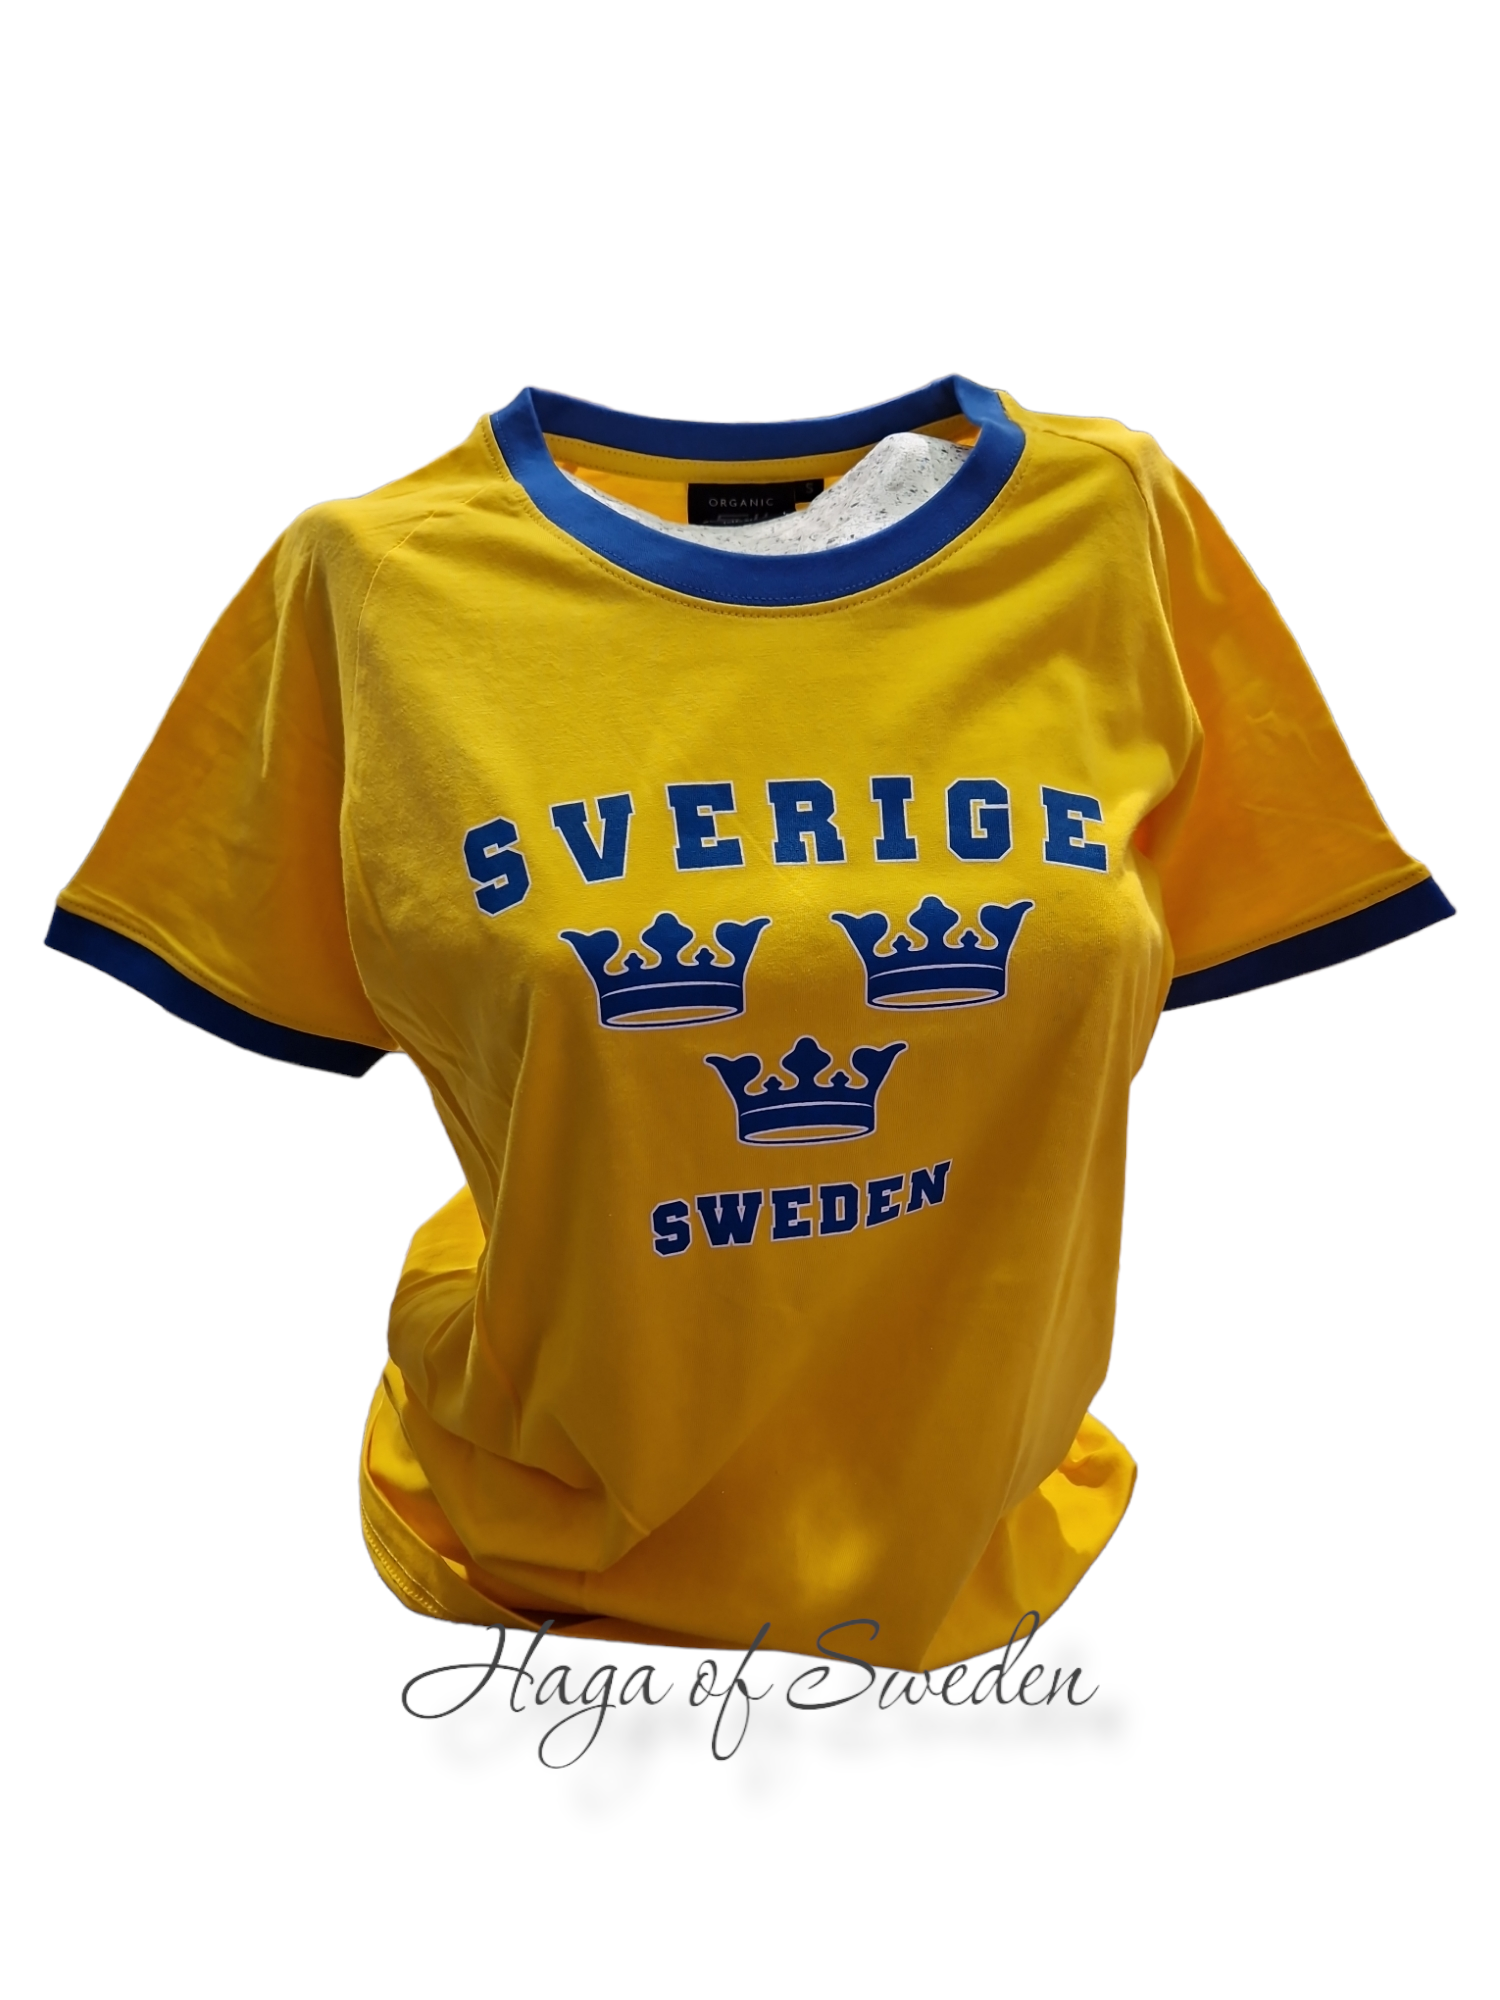 T-SHIRT Sverige gul / blå kronor